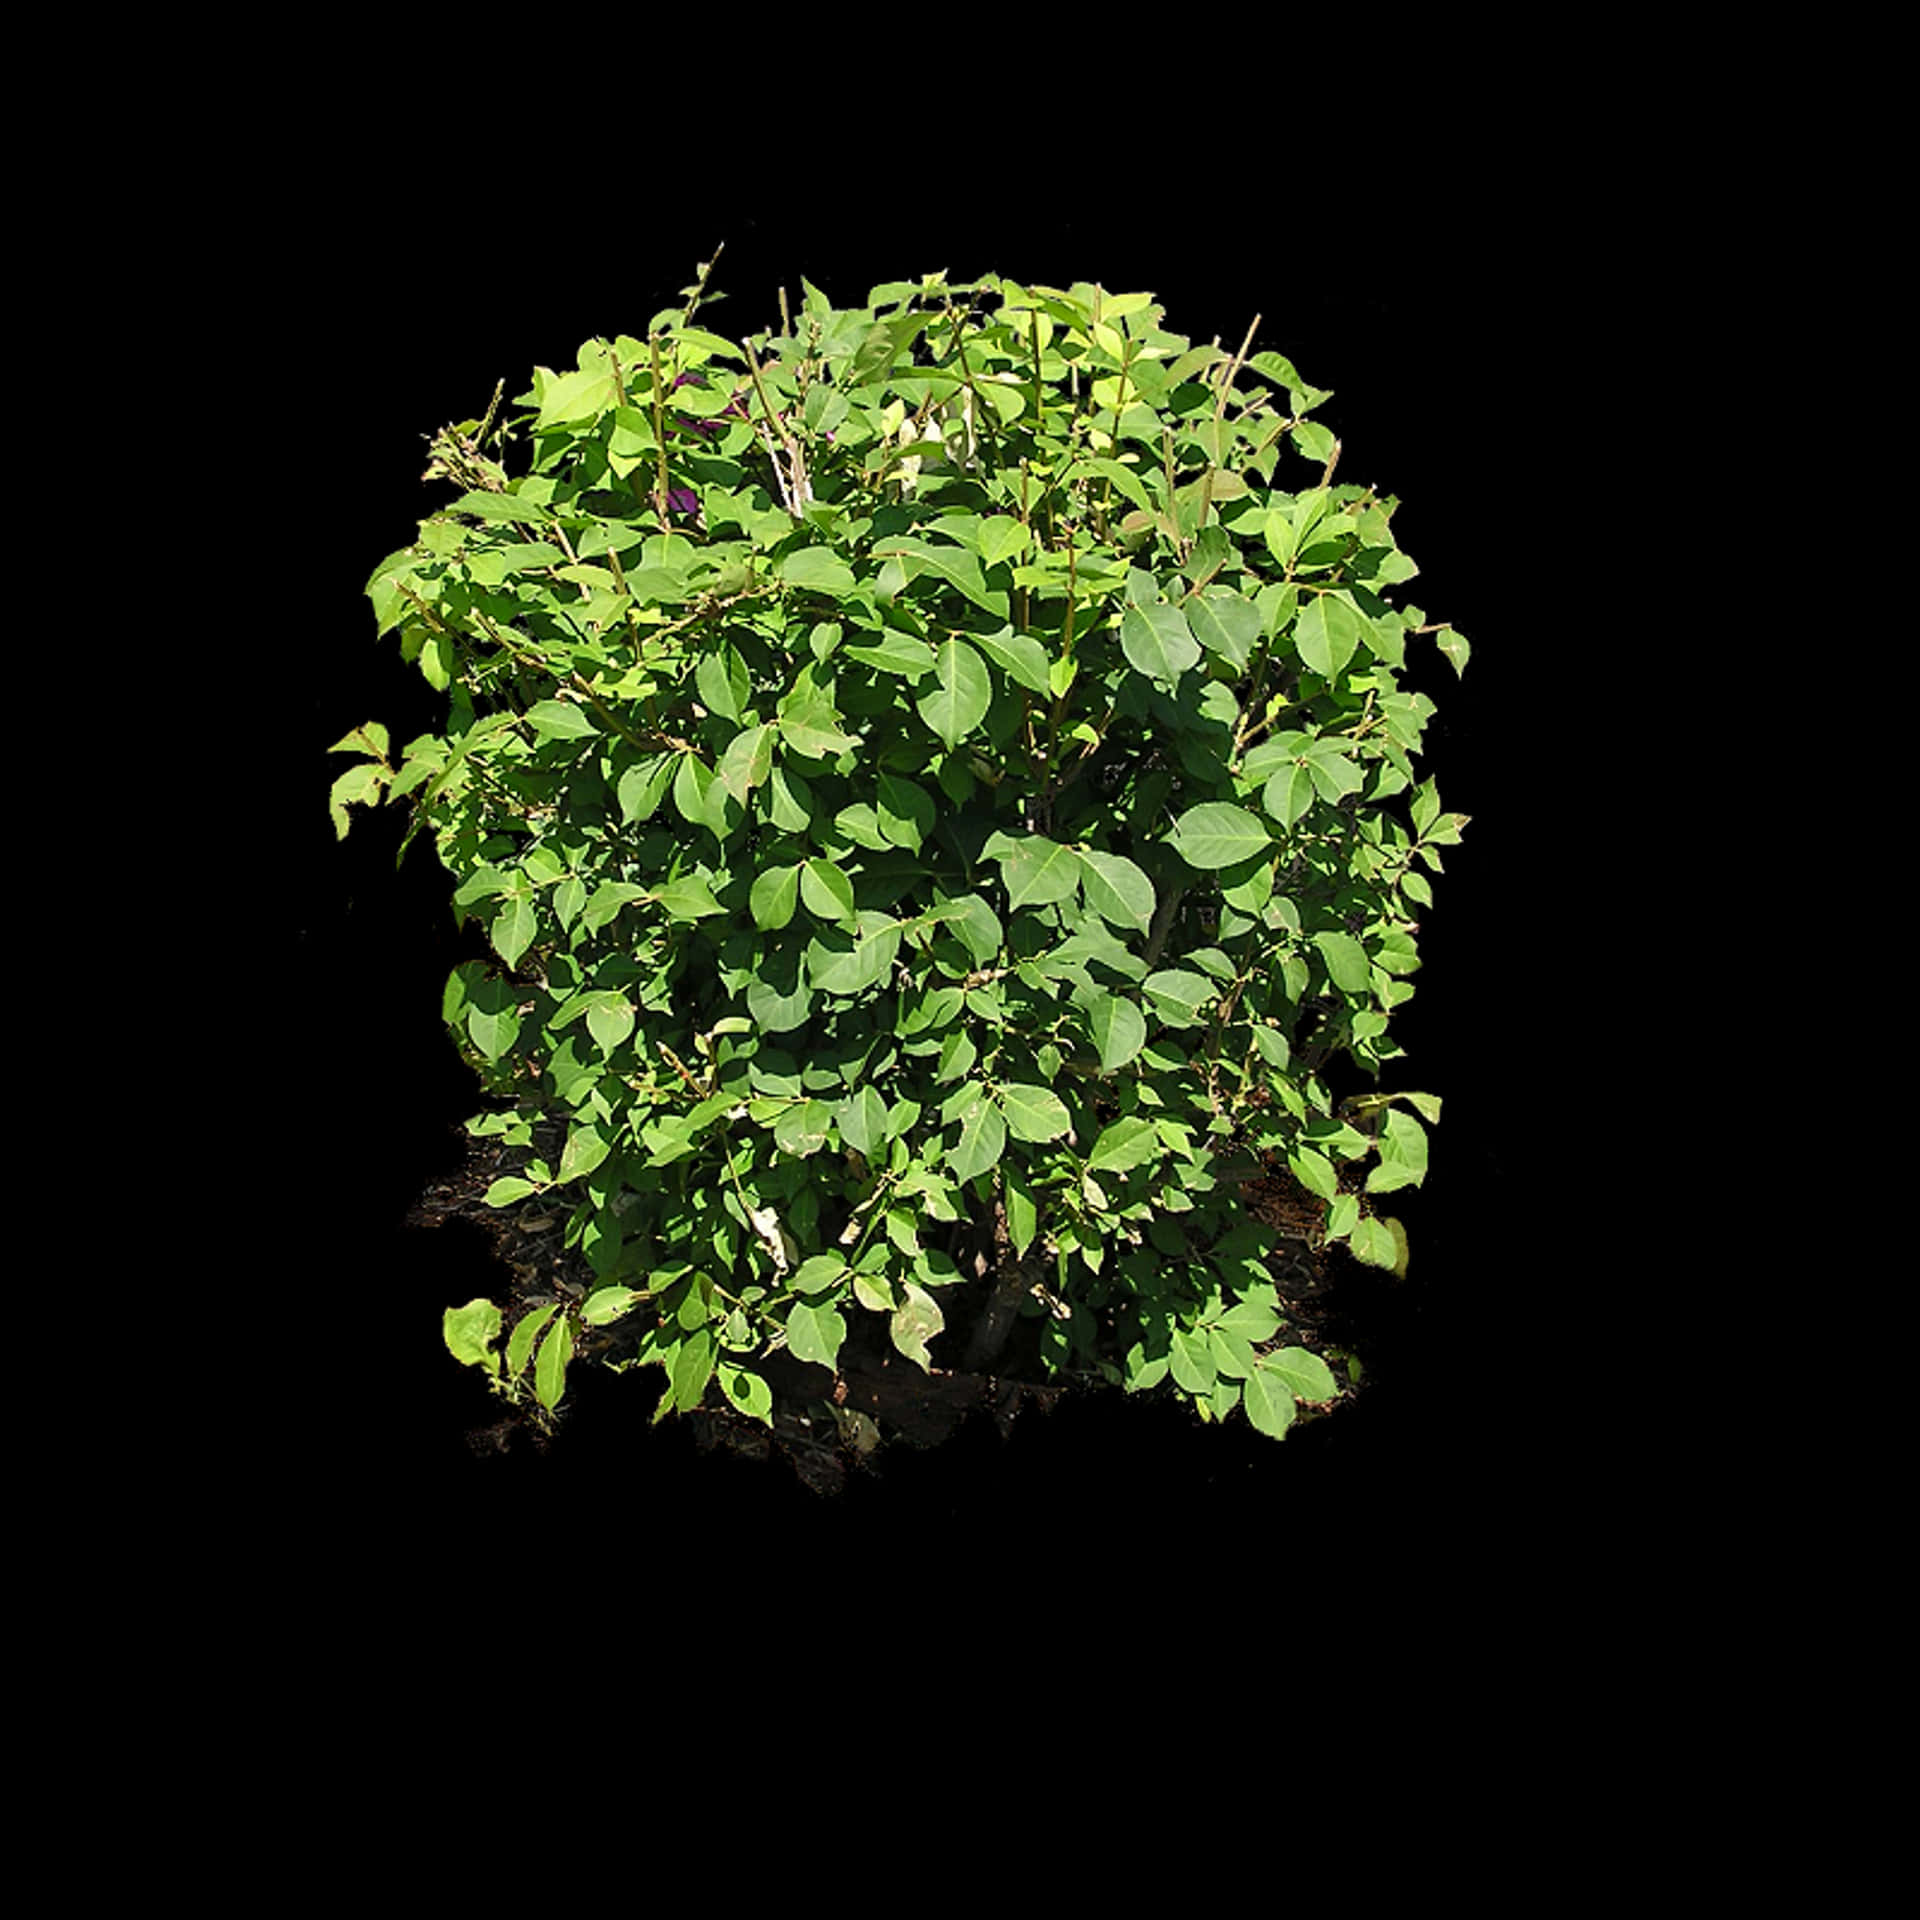 Minimalist Shaggy Green Dendrolobium Bush Picture